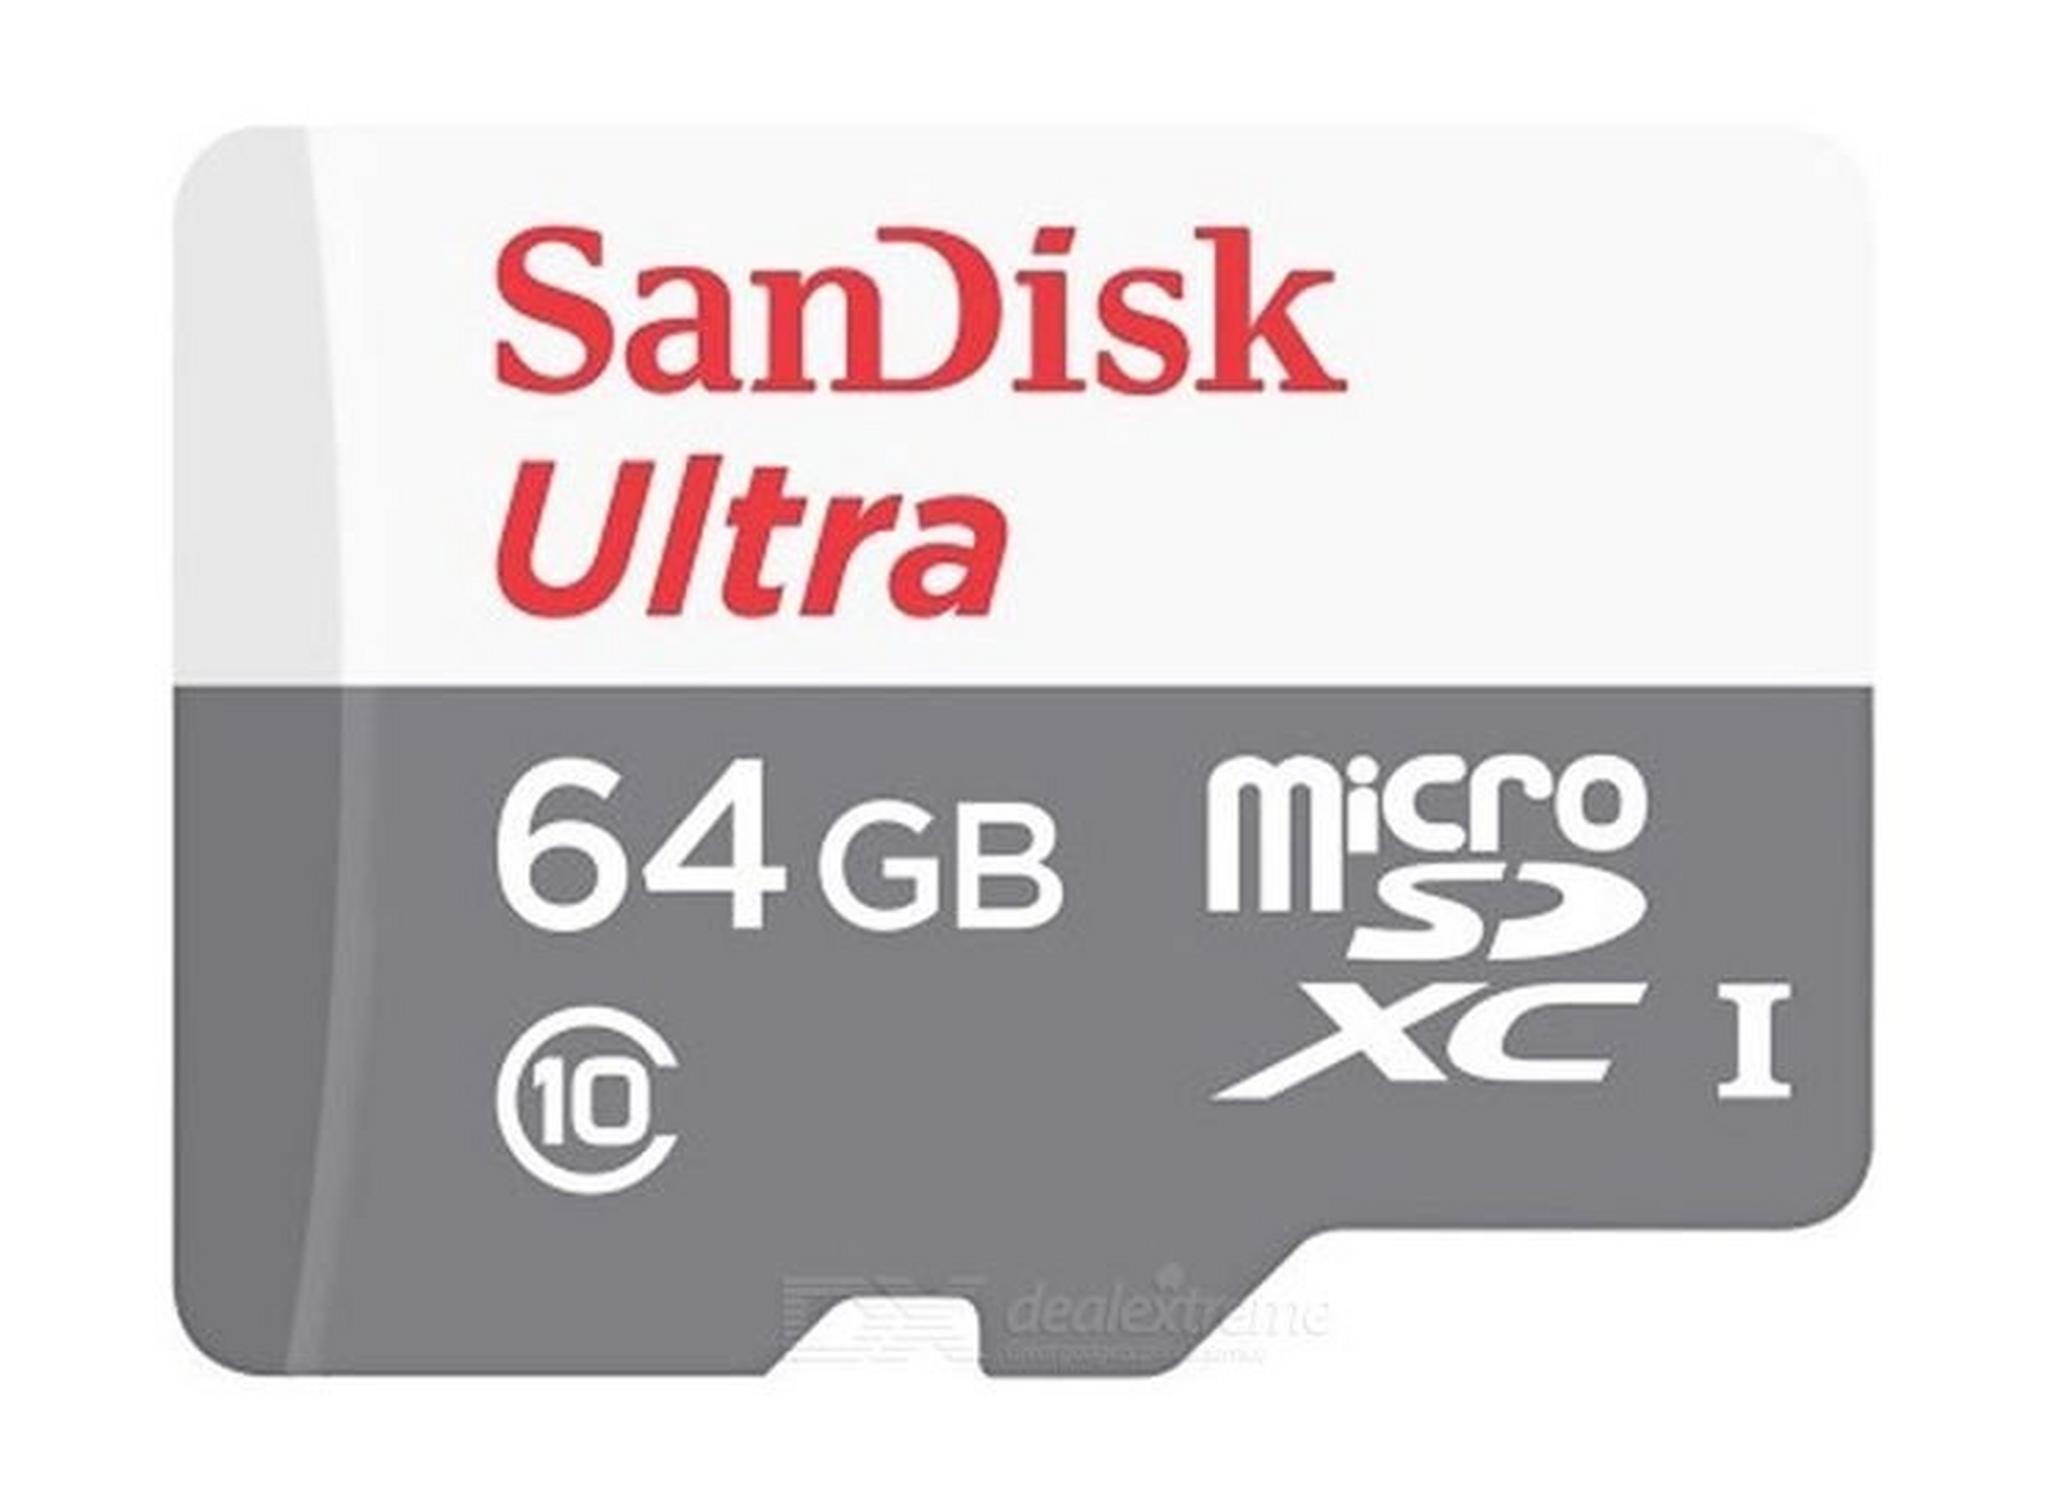 SanDisk Ultra UHS-I 64GB MicroSD 80Mb/s Class 10 Card